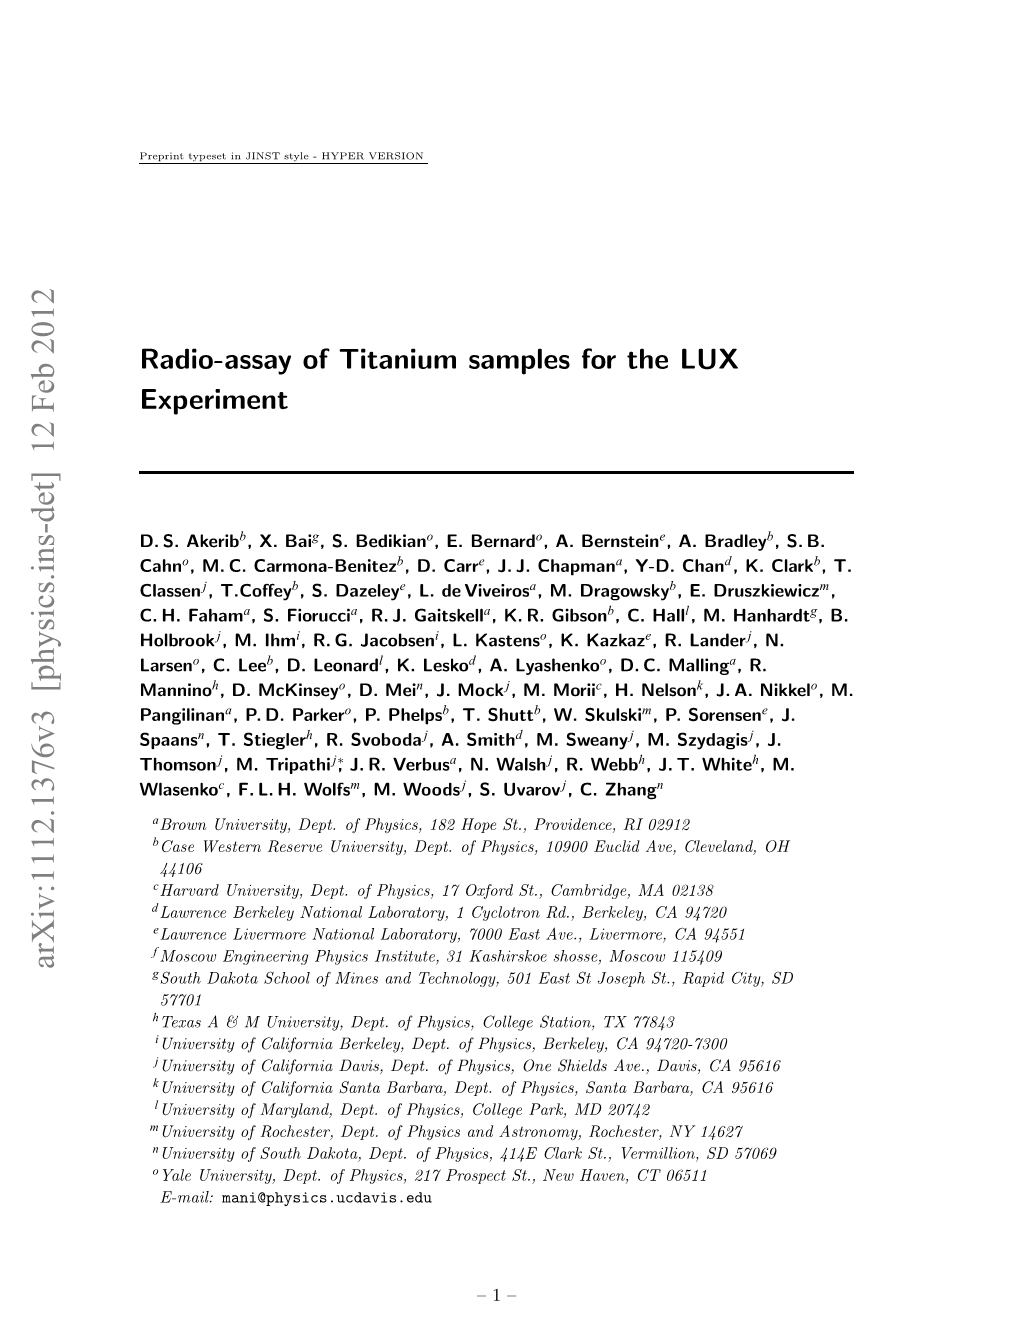 Radio-Assay of Titanium Samples for the LUX Experiment